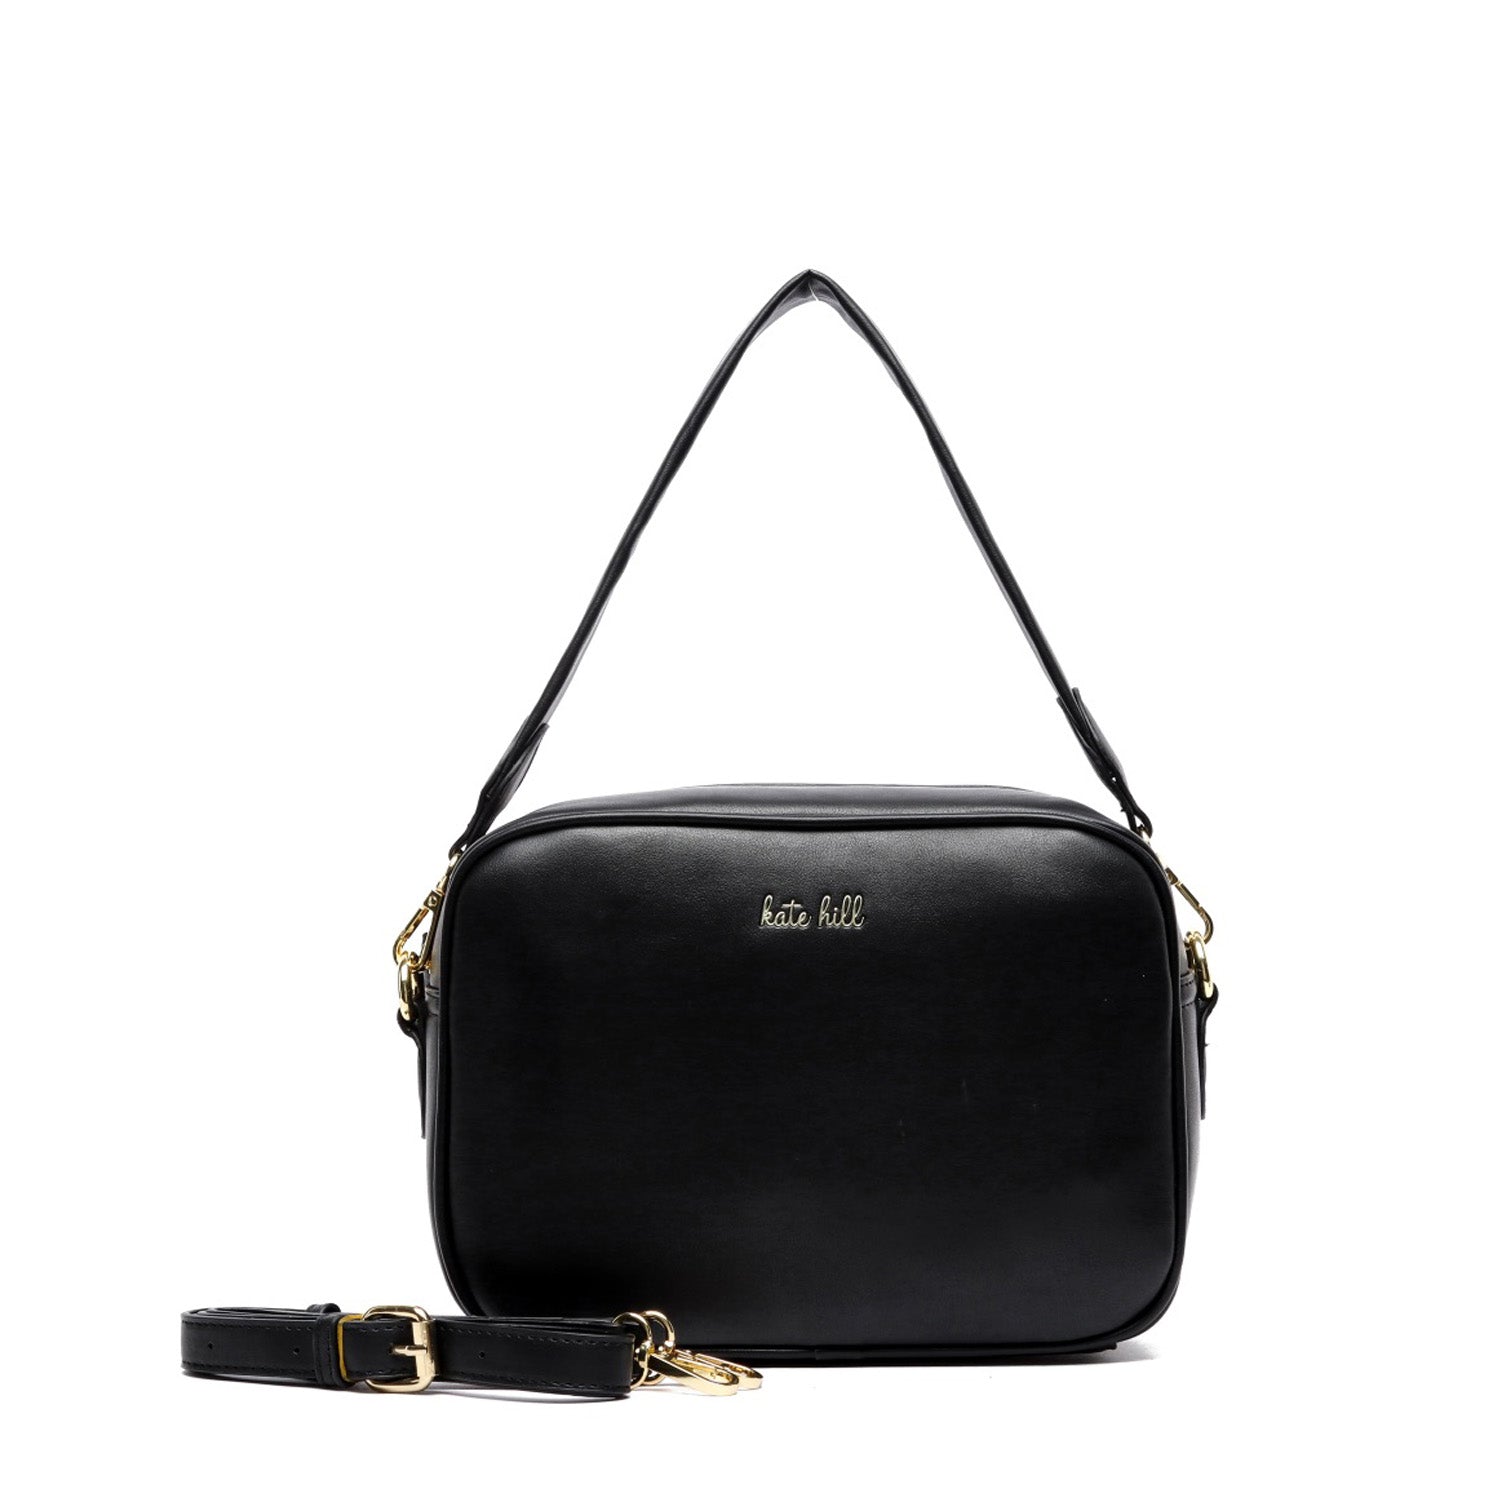 Kate Hill Ellen Shoulder Bag - Black | Catch.com.au